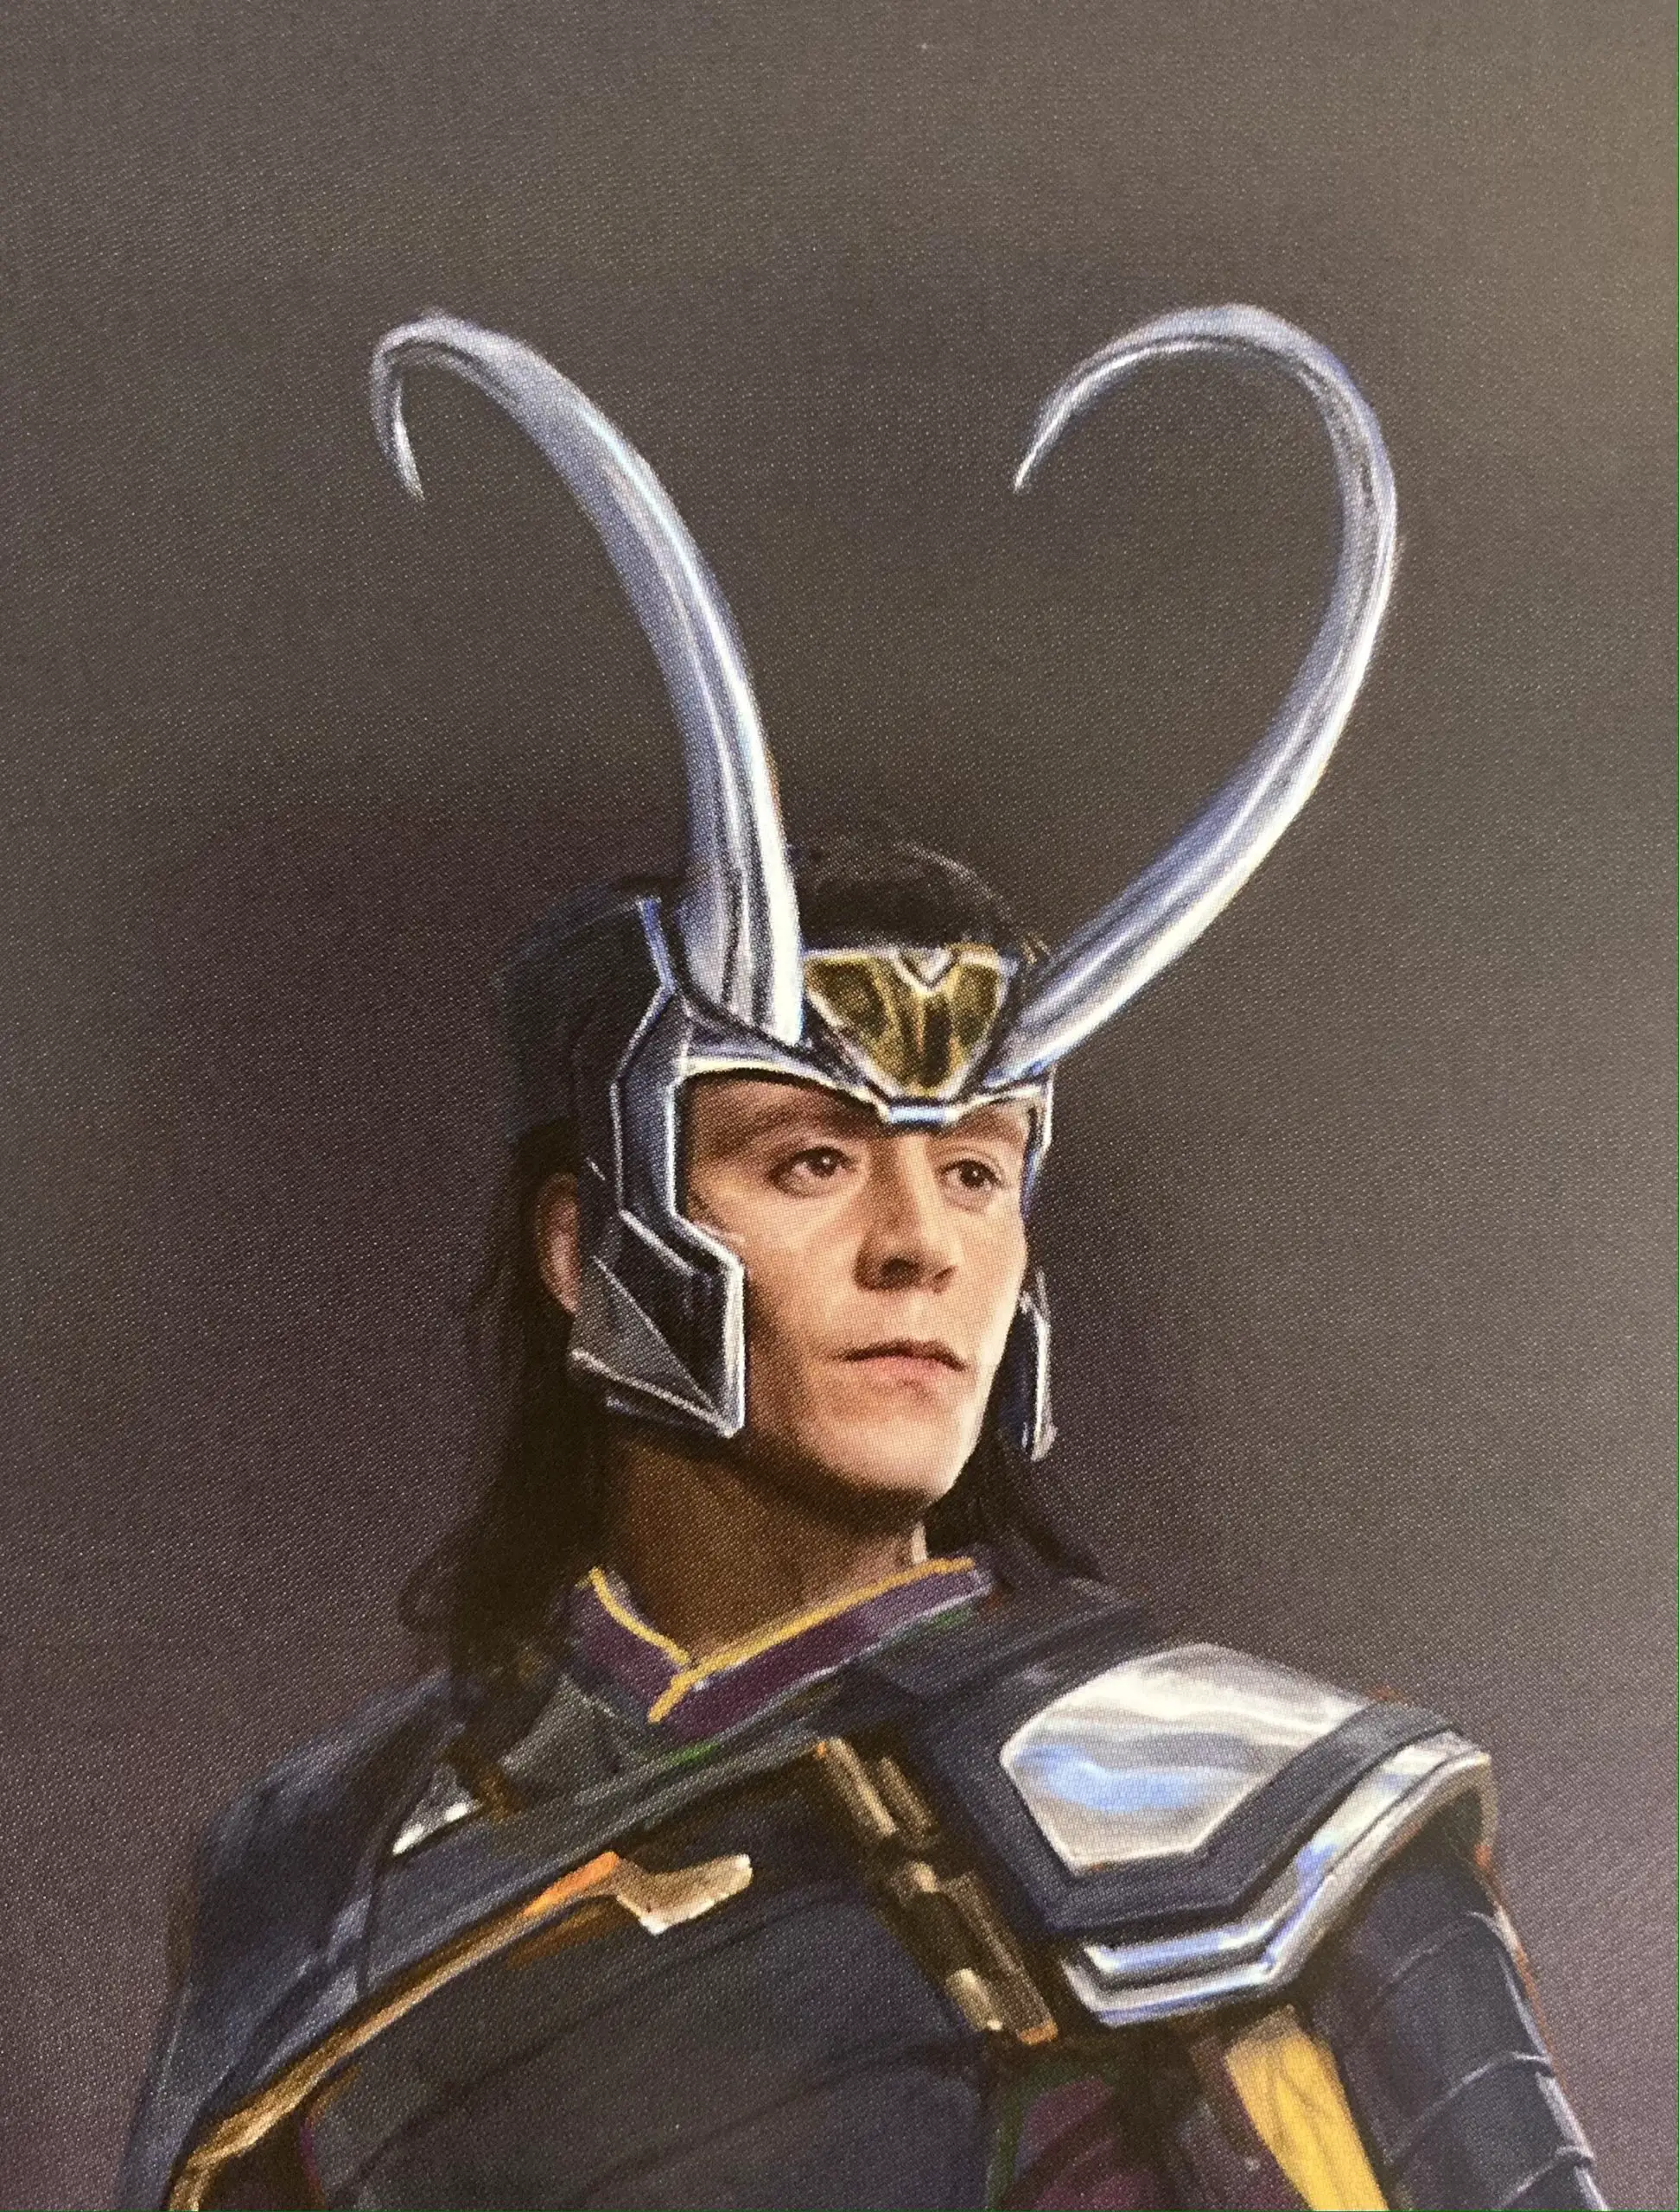 Loki headpiece in The Art of the Movie